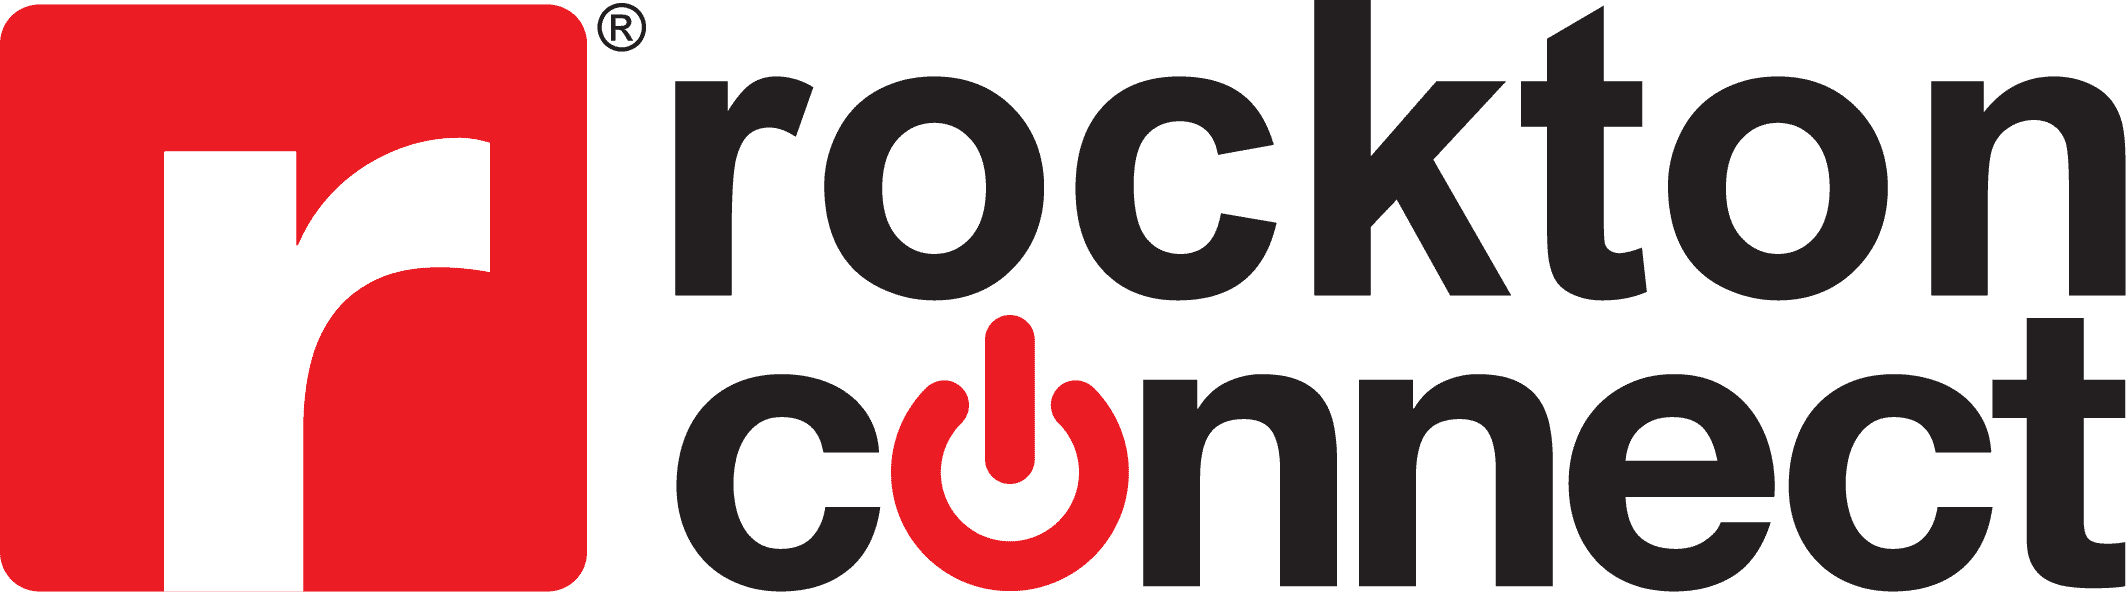 Rockton Connect is exhibiting at CannaCon!